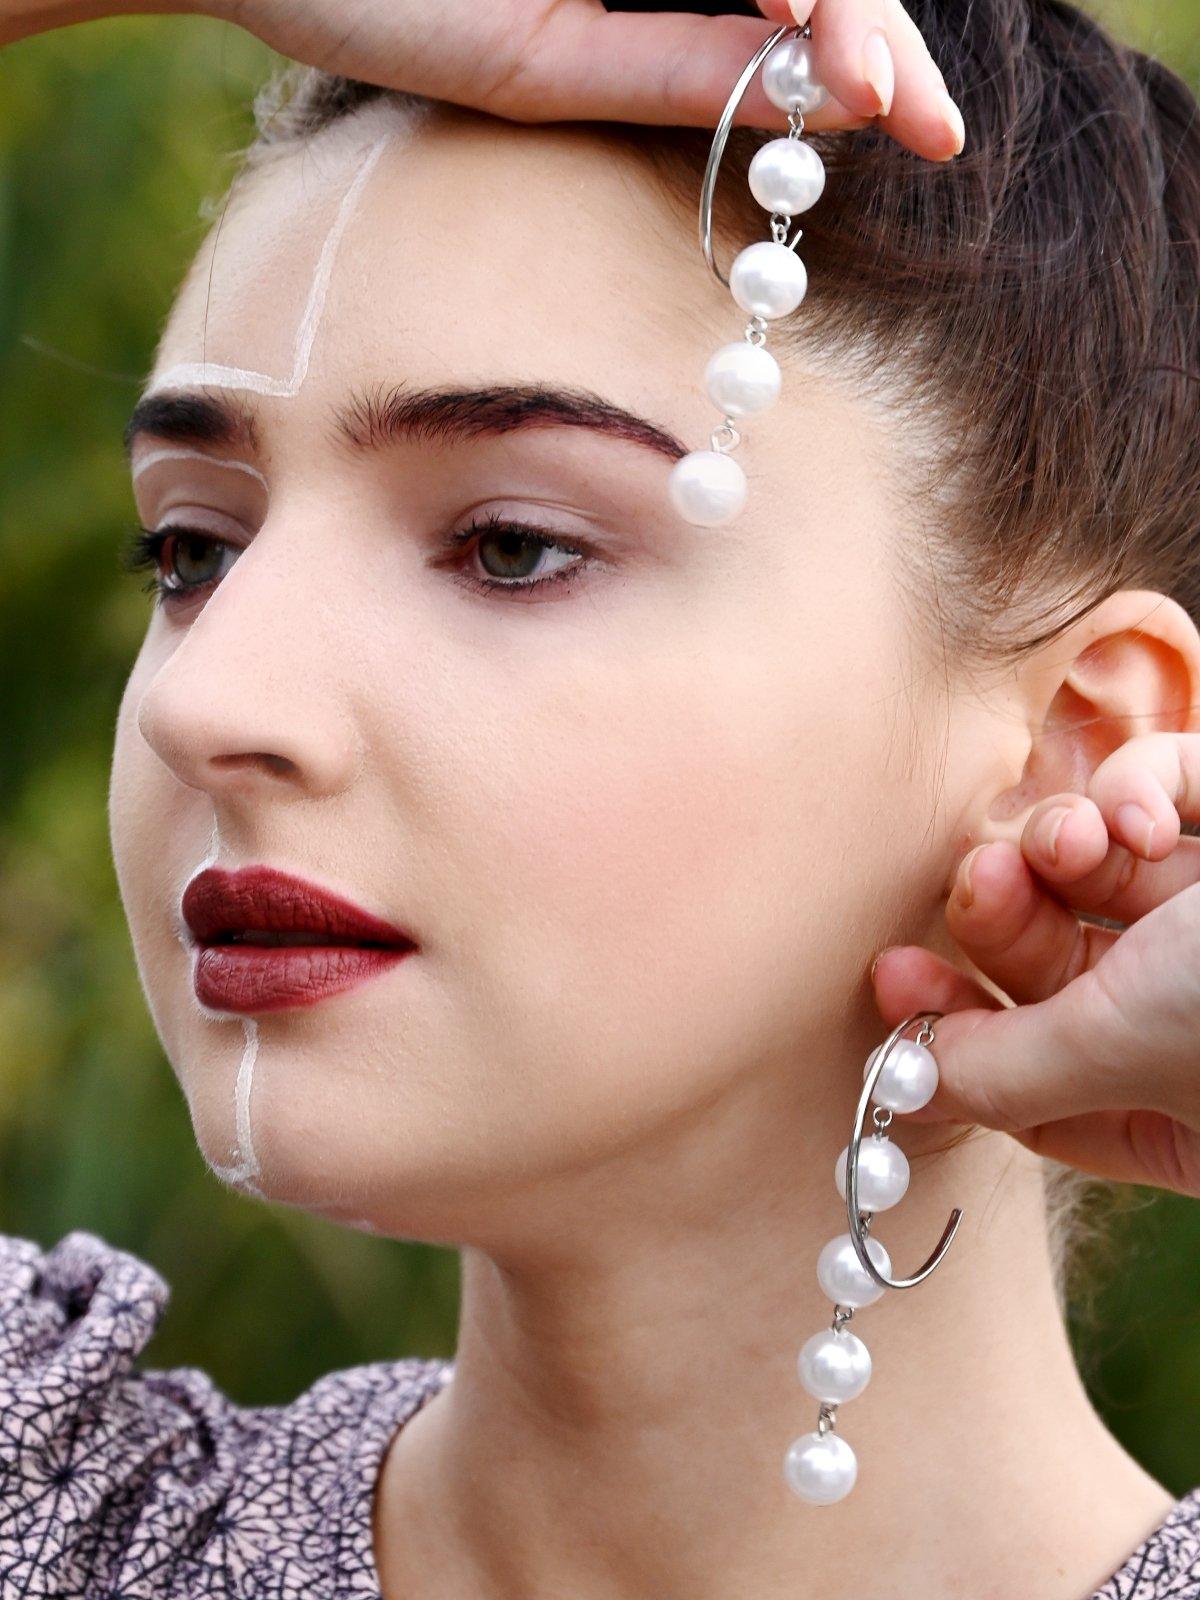 Silver Hoop Earrings with Pearls - Odette